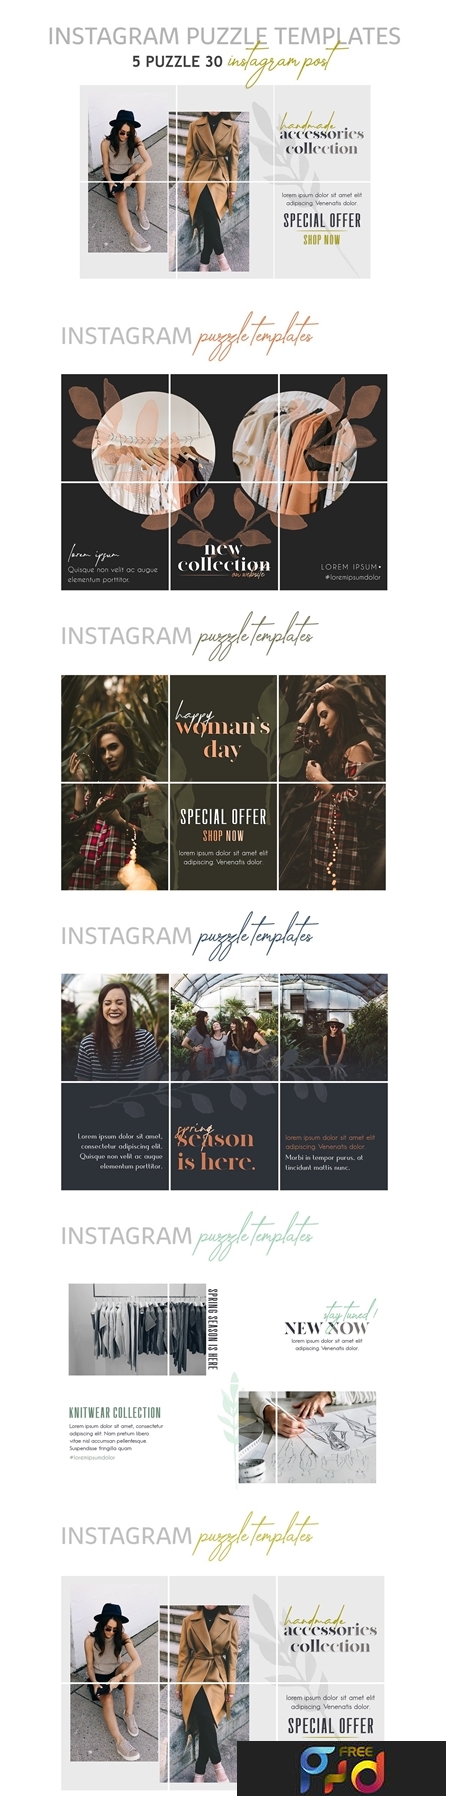 Instagram Puzzle Templates - Fashion 3446314 1